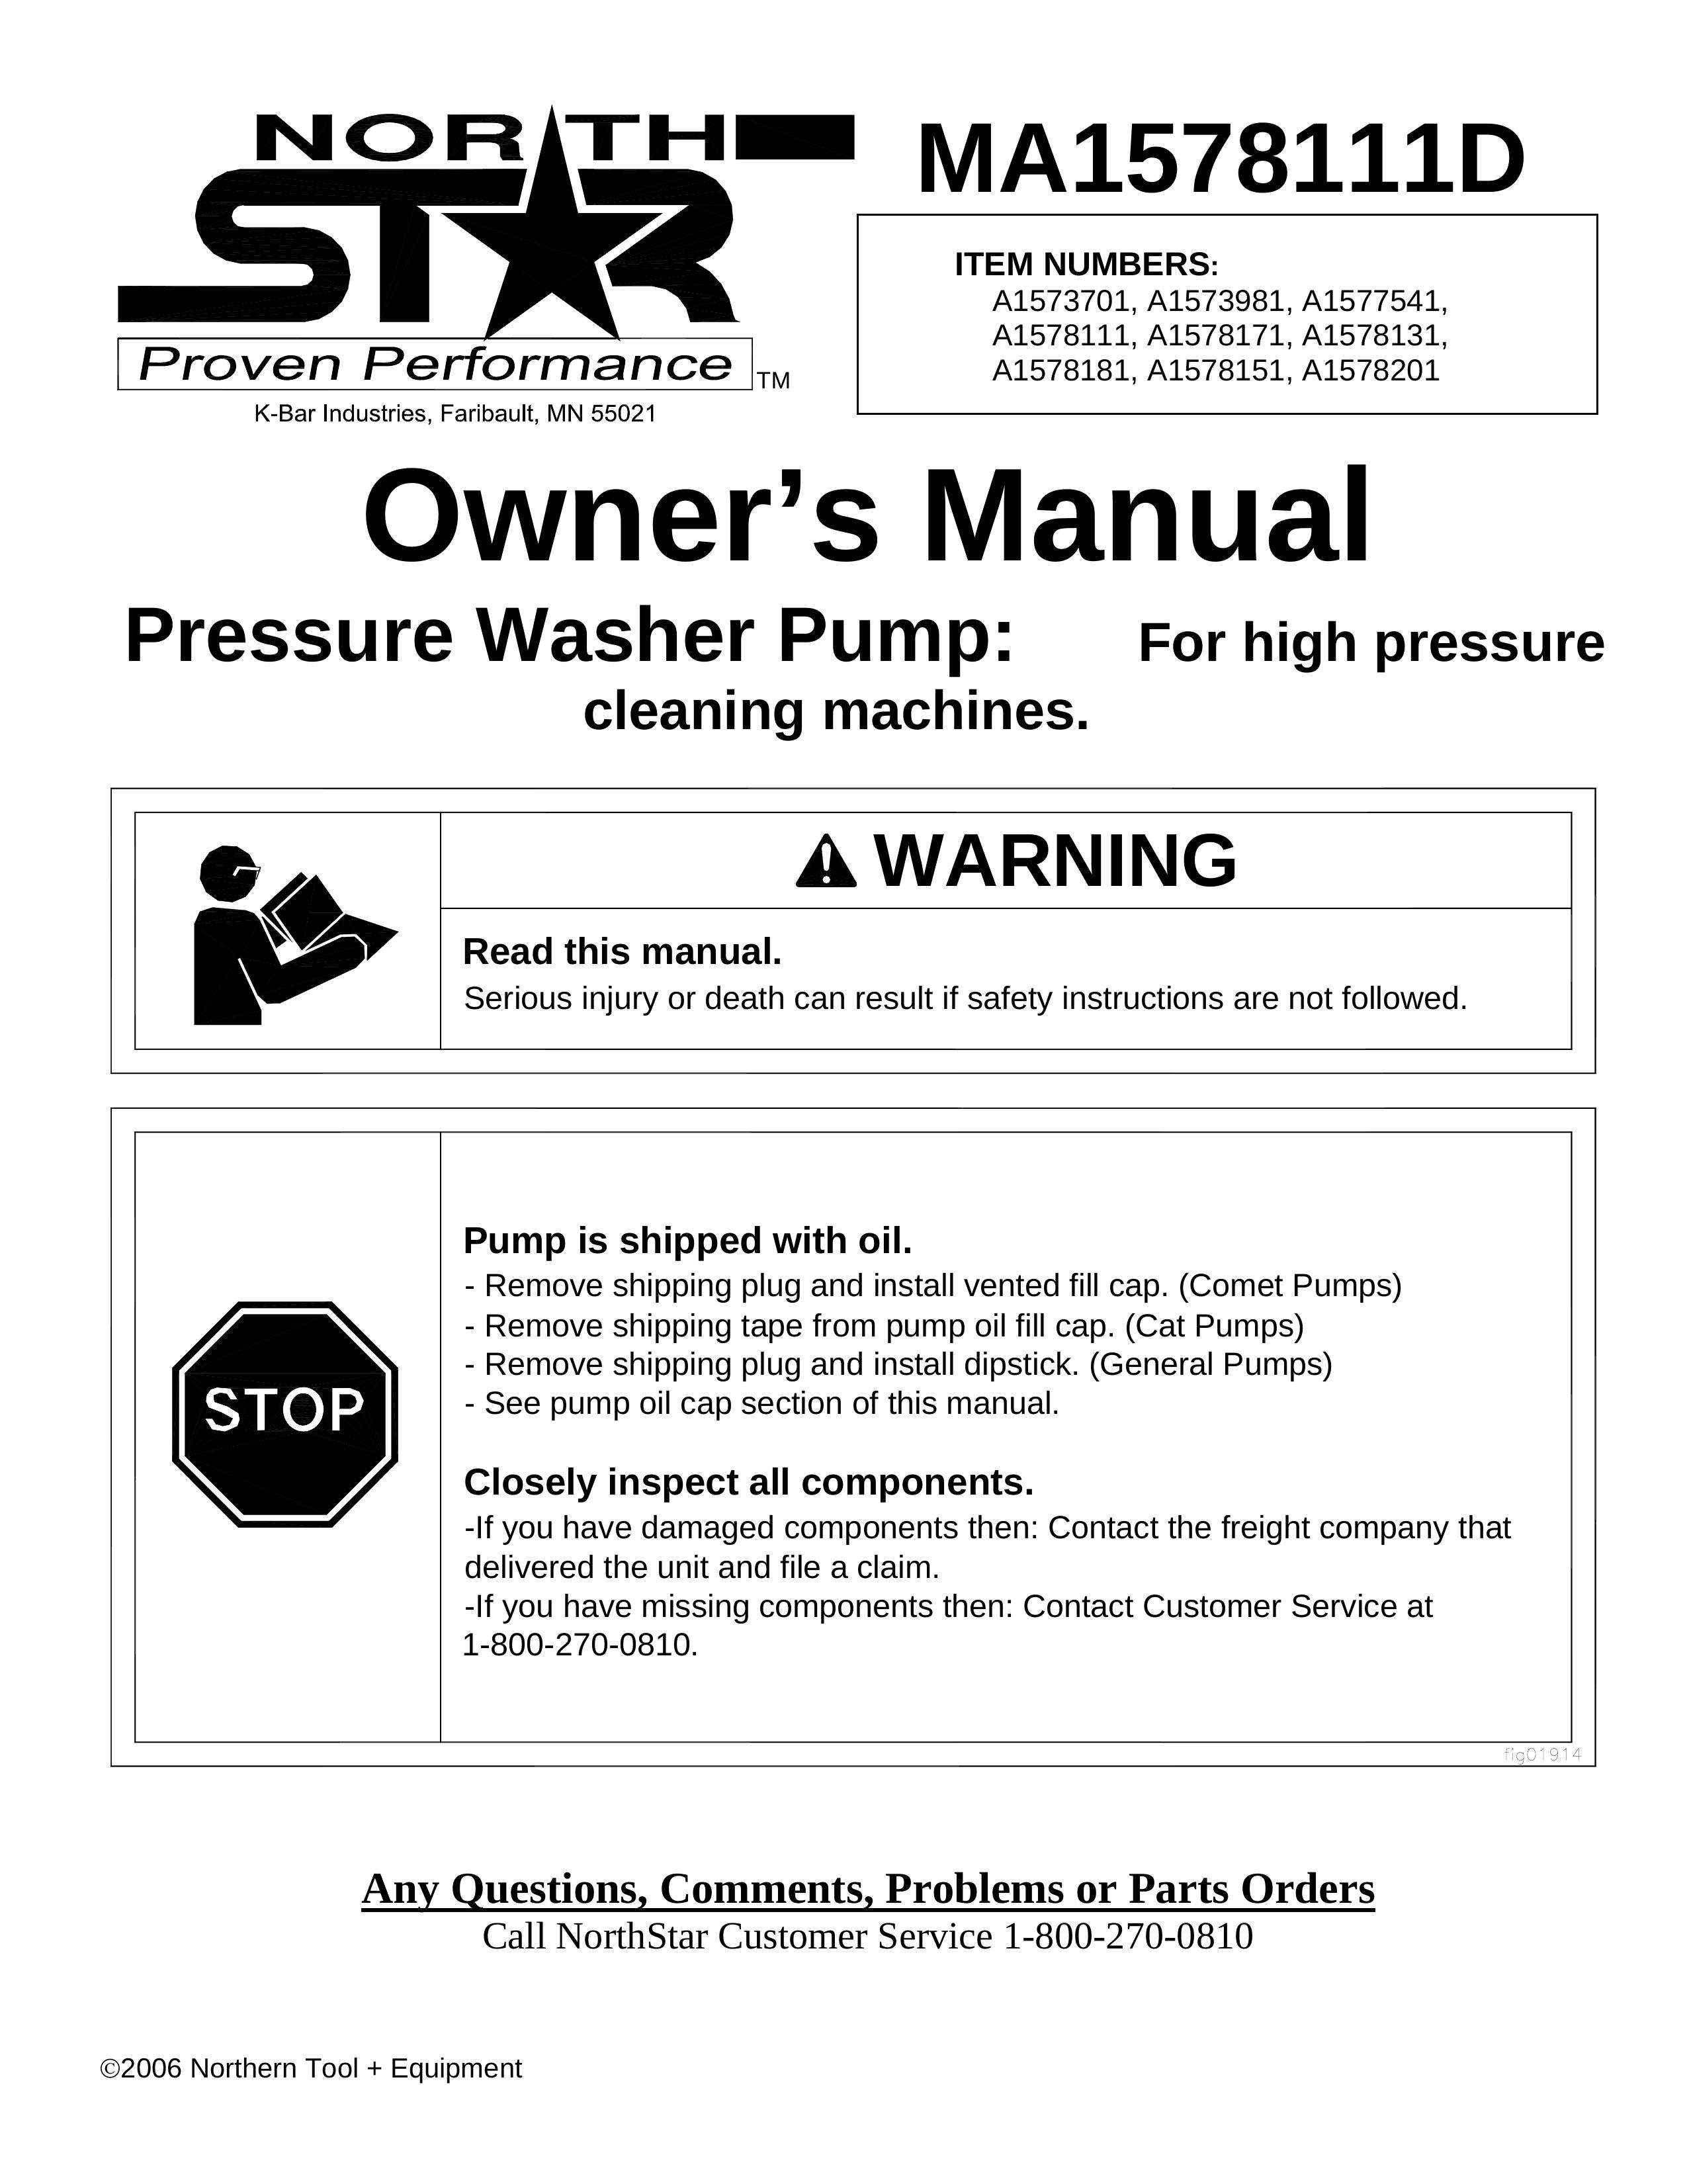 North Star MA 1578111D Pressure Washer User Manual